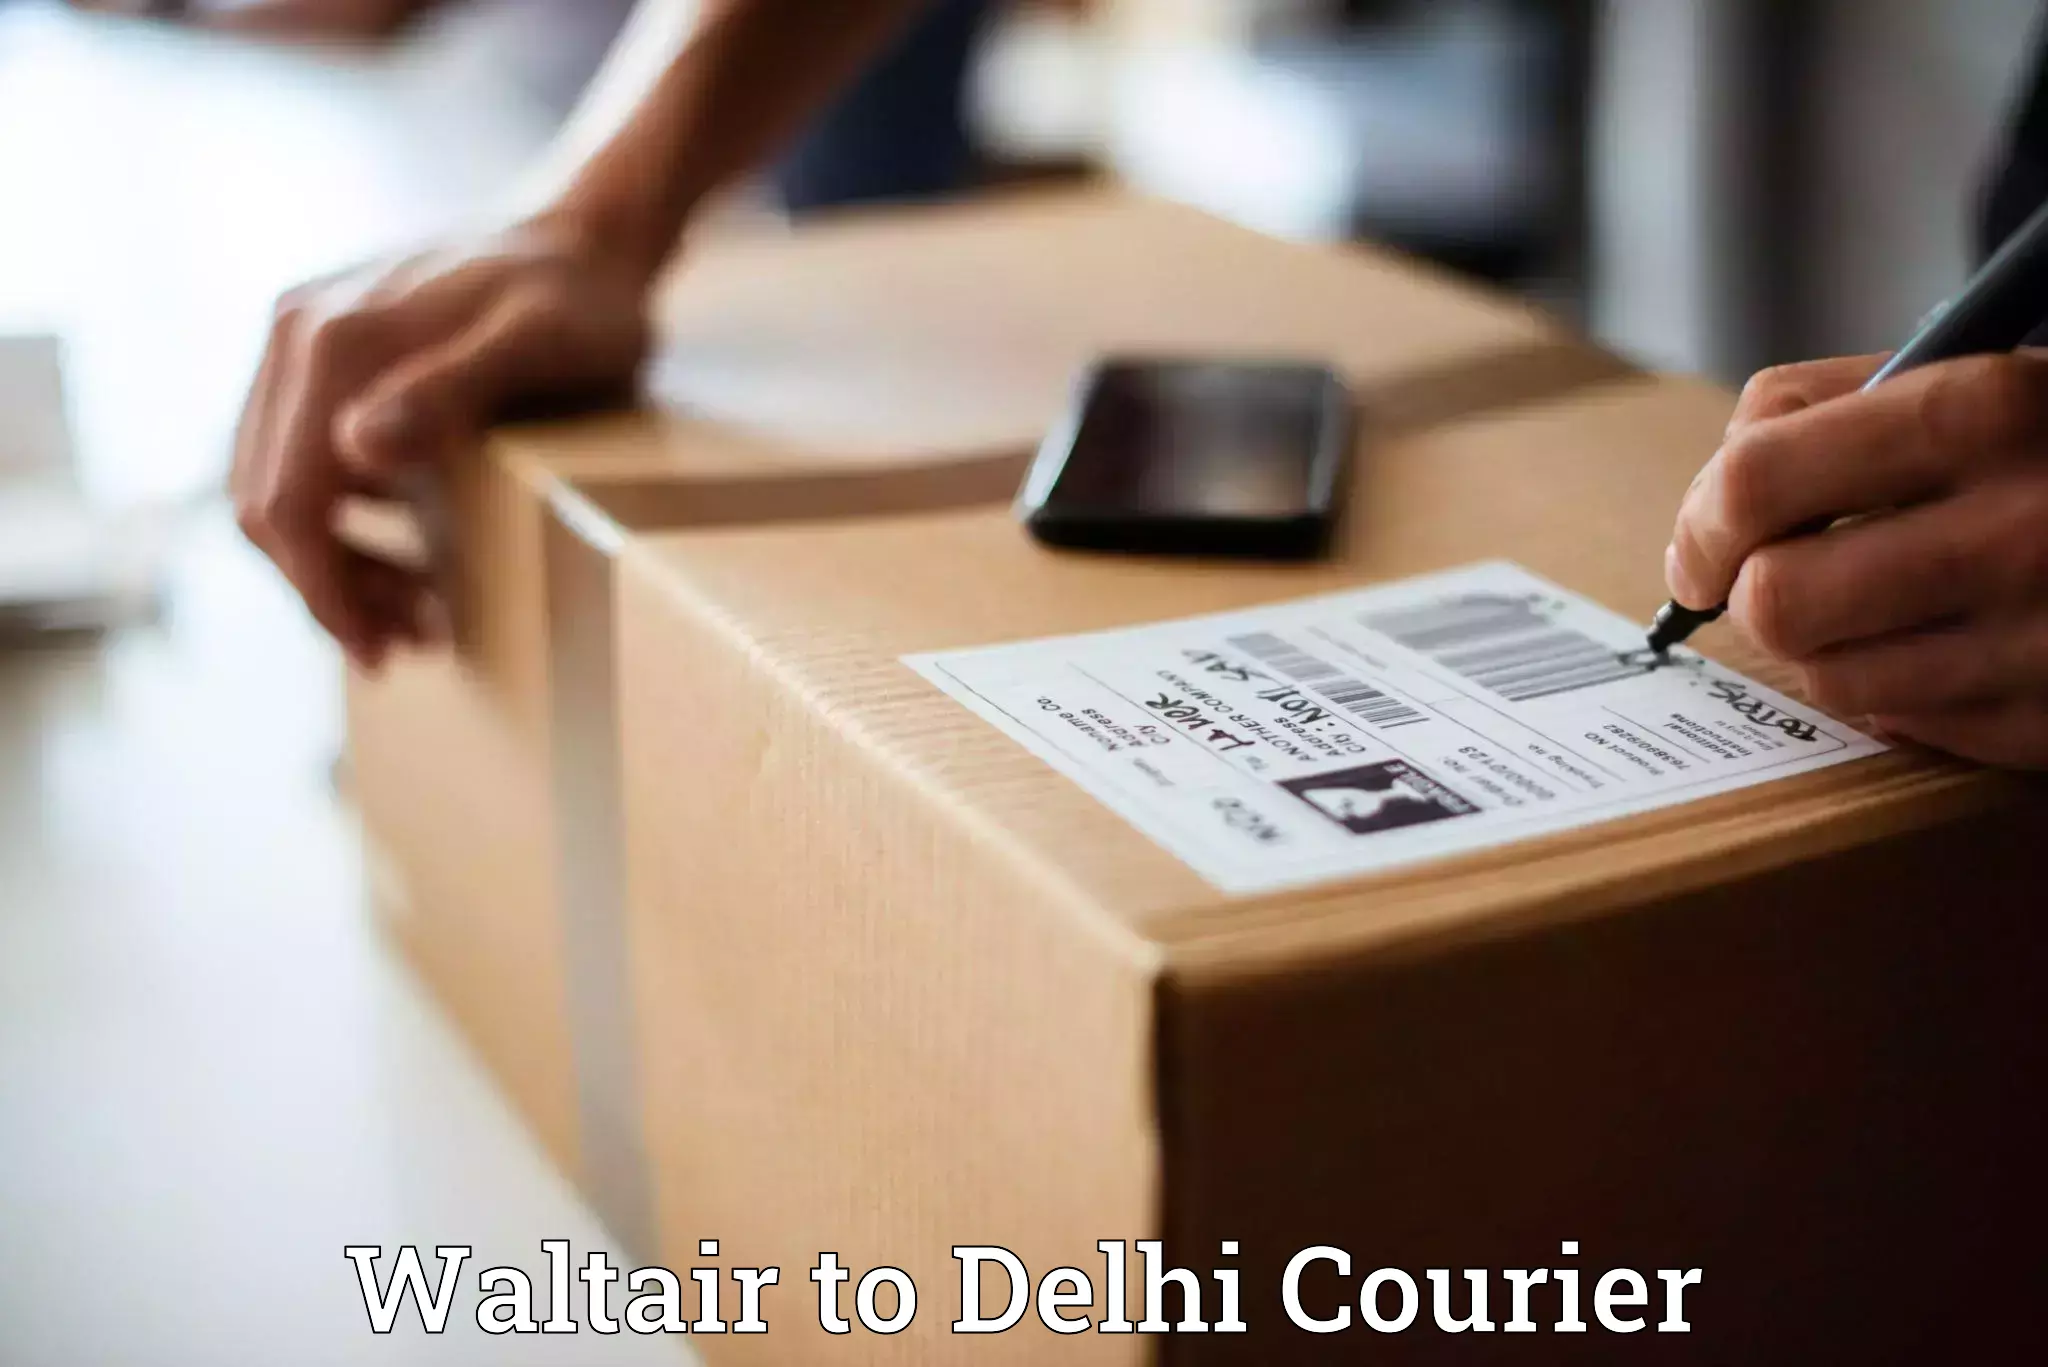 Express logistics providers Waltair to University of Delhi